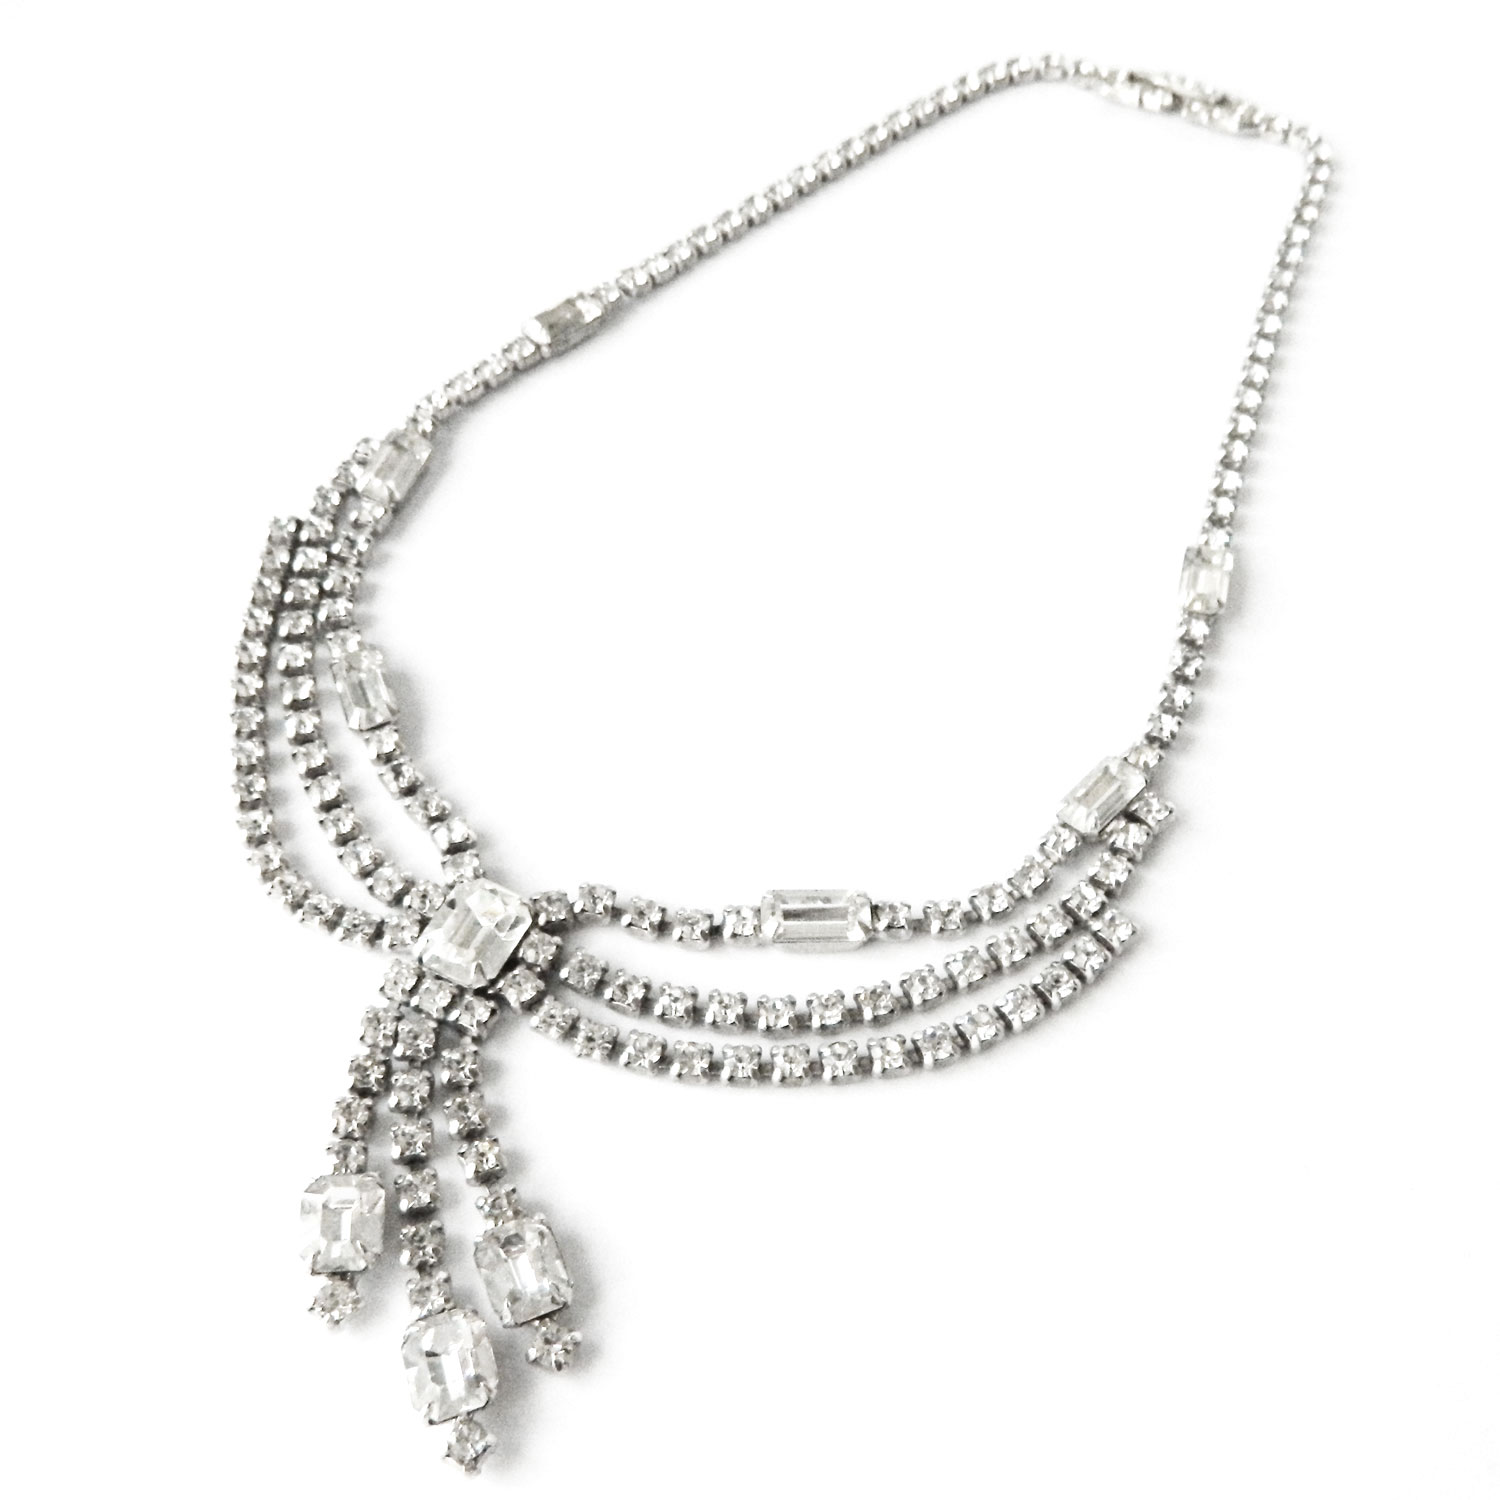 1950's Kramer rhinestone necklace